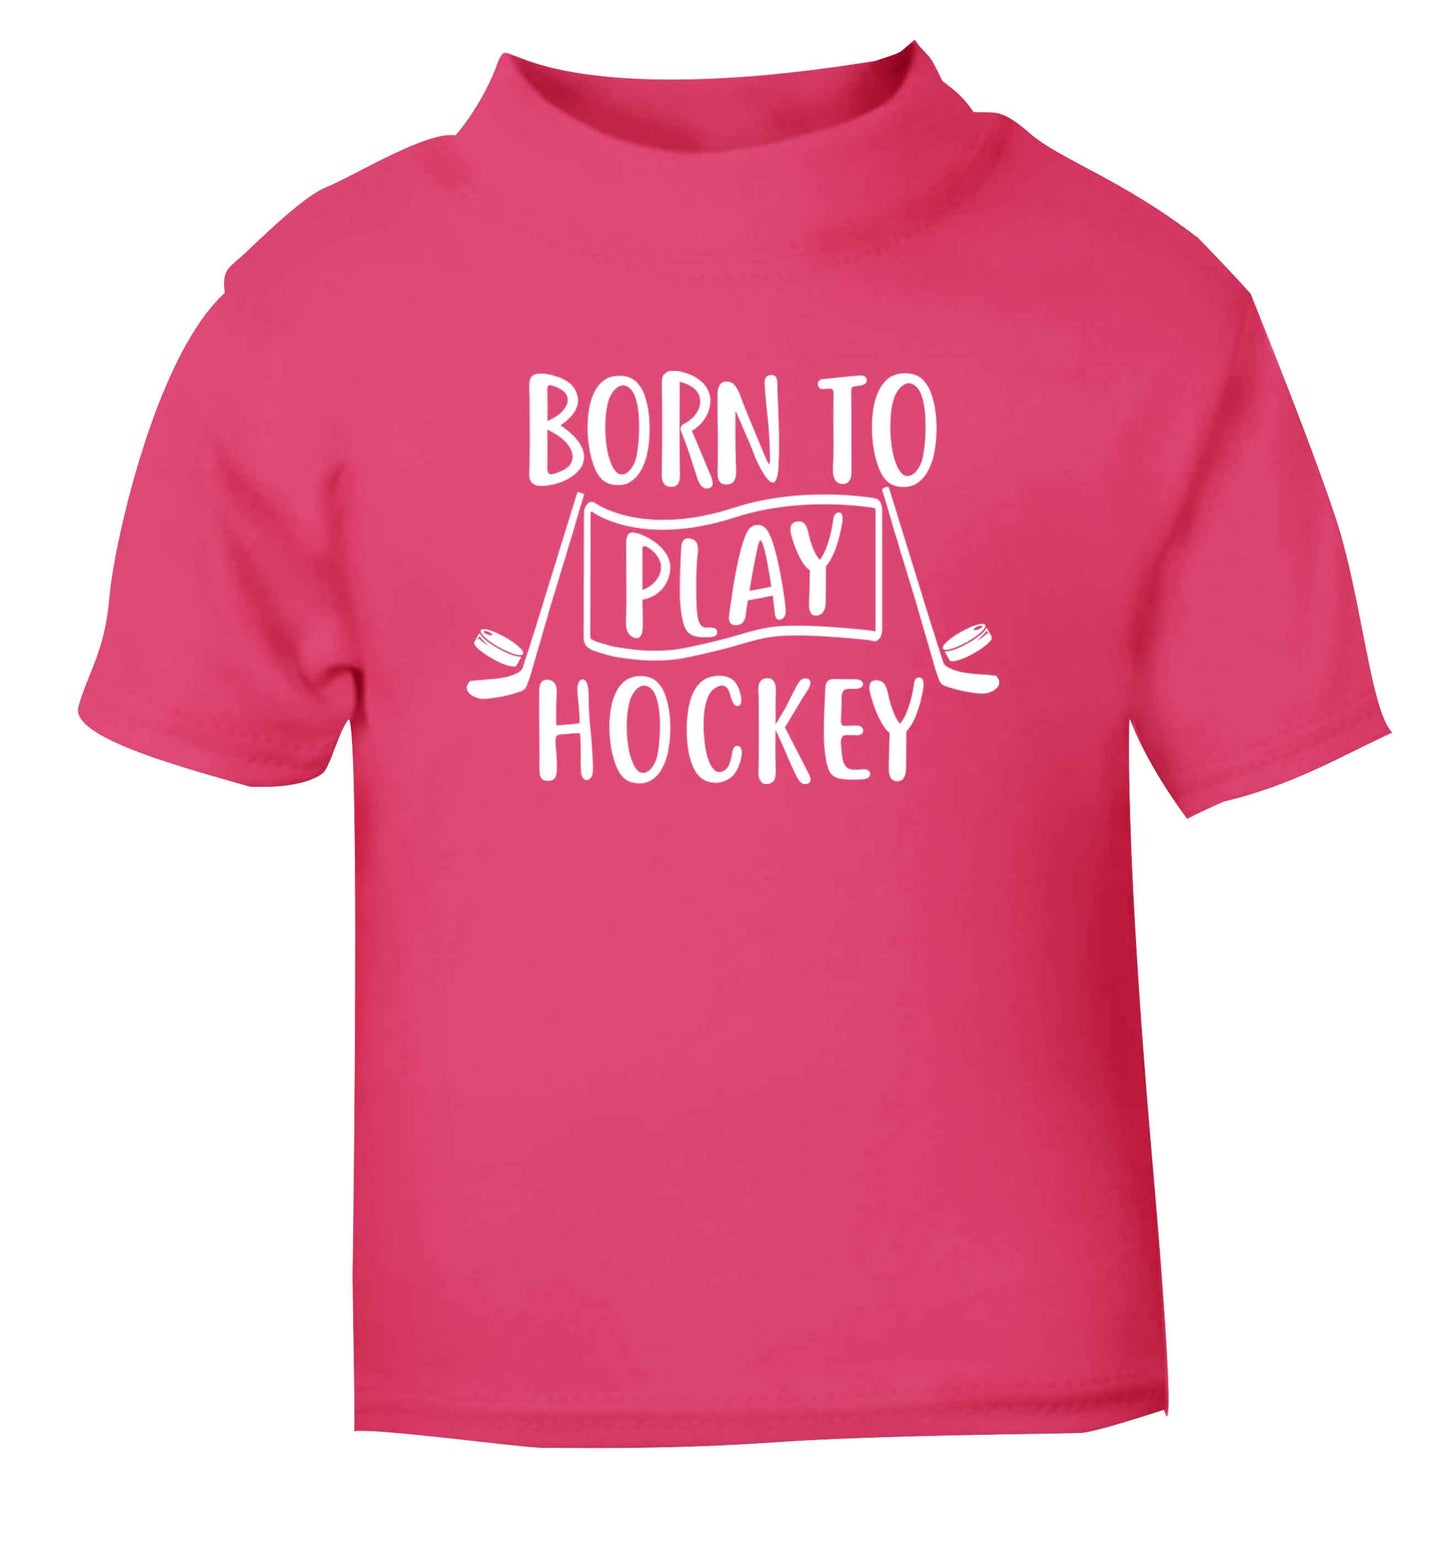 Born to play hockey pink Baby Toddler Tshirt 2 Years